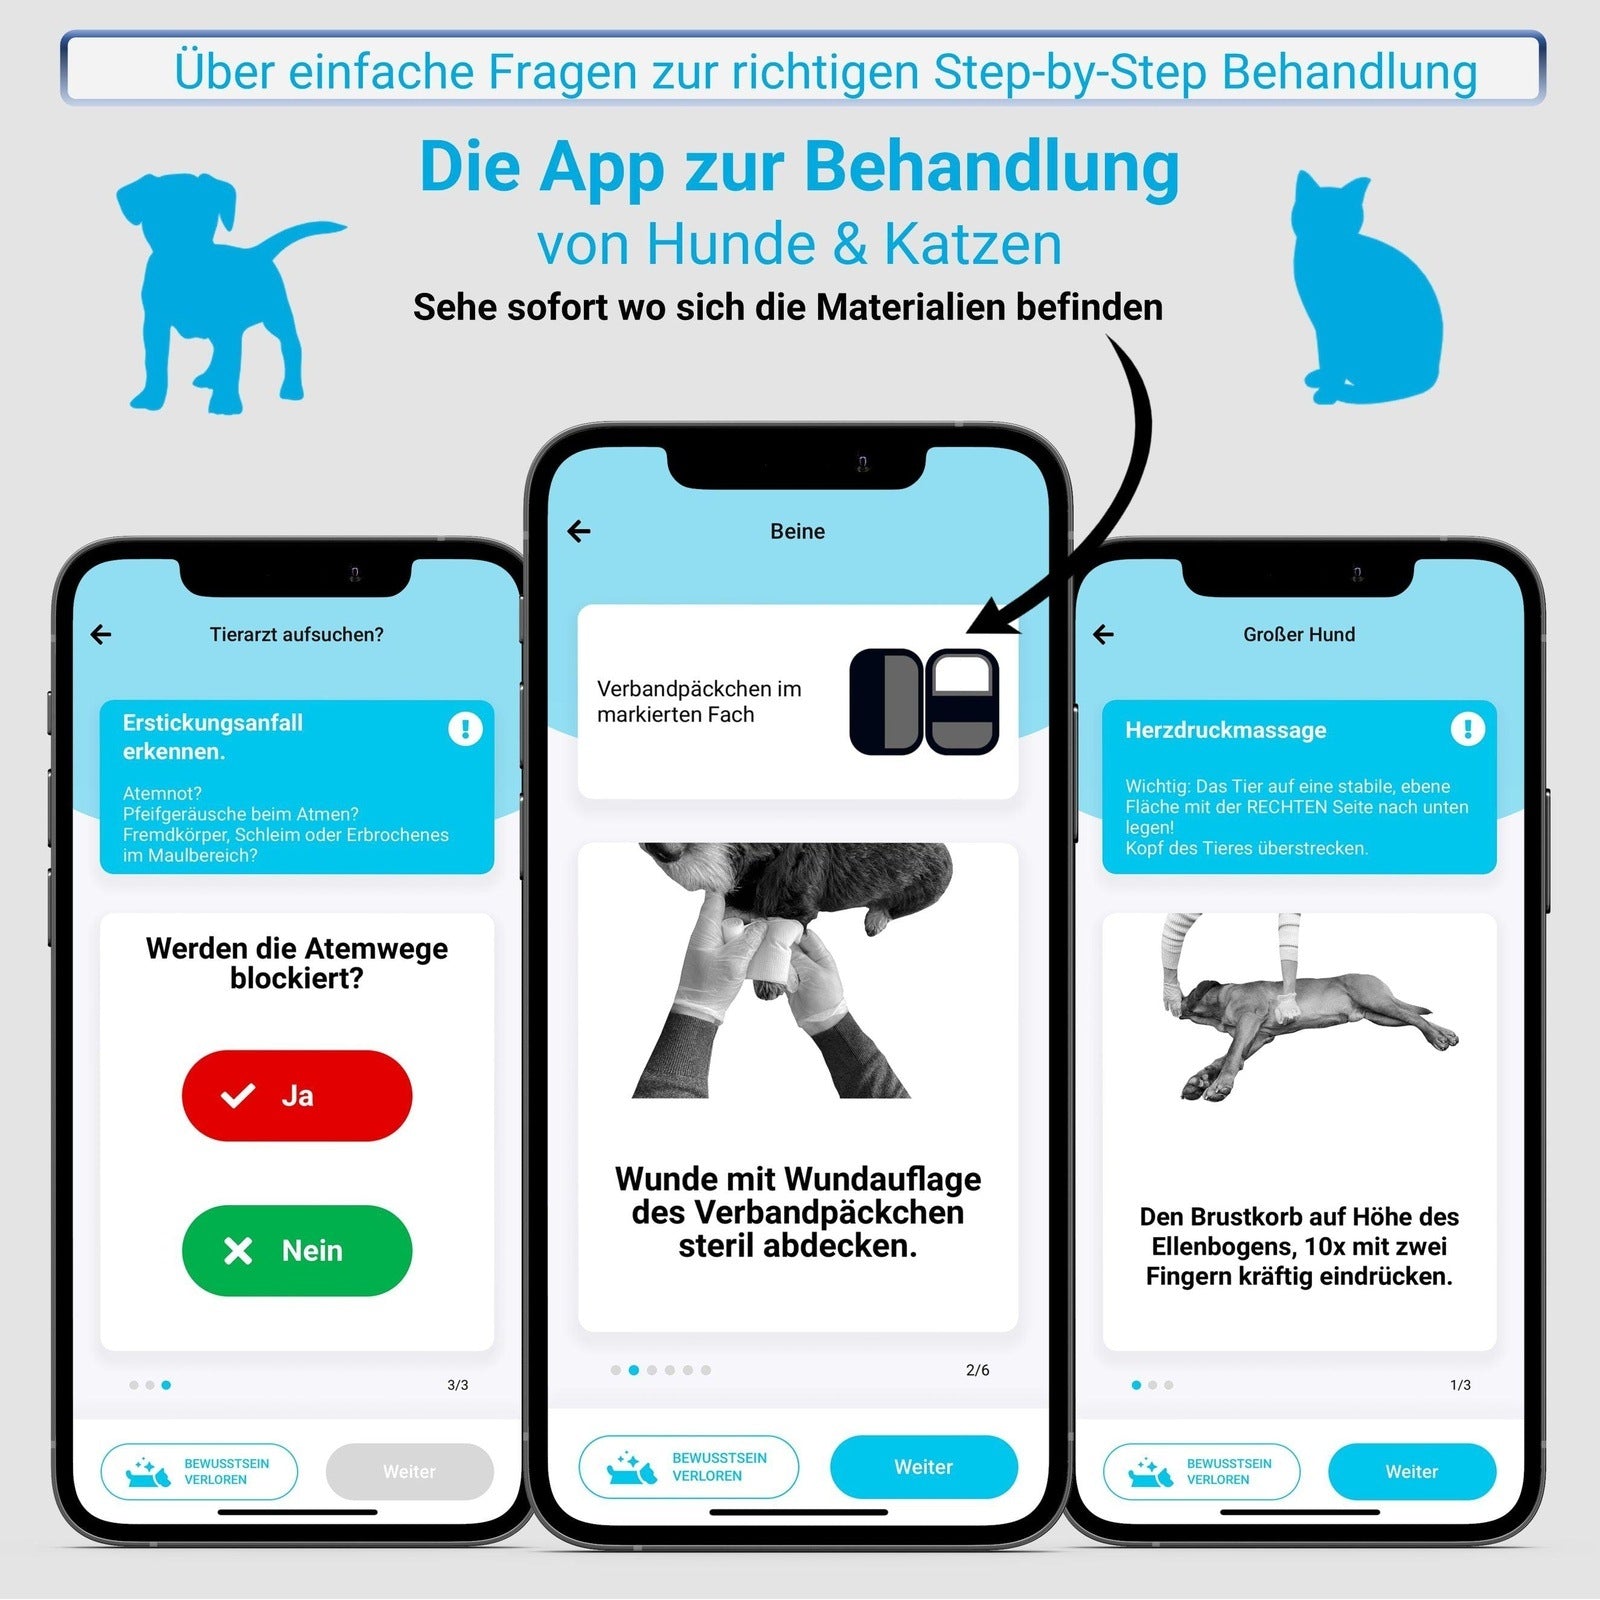 PocDoc - Erste Hilfe Set inklusive App -  dein Tier fairtraut dir!